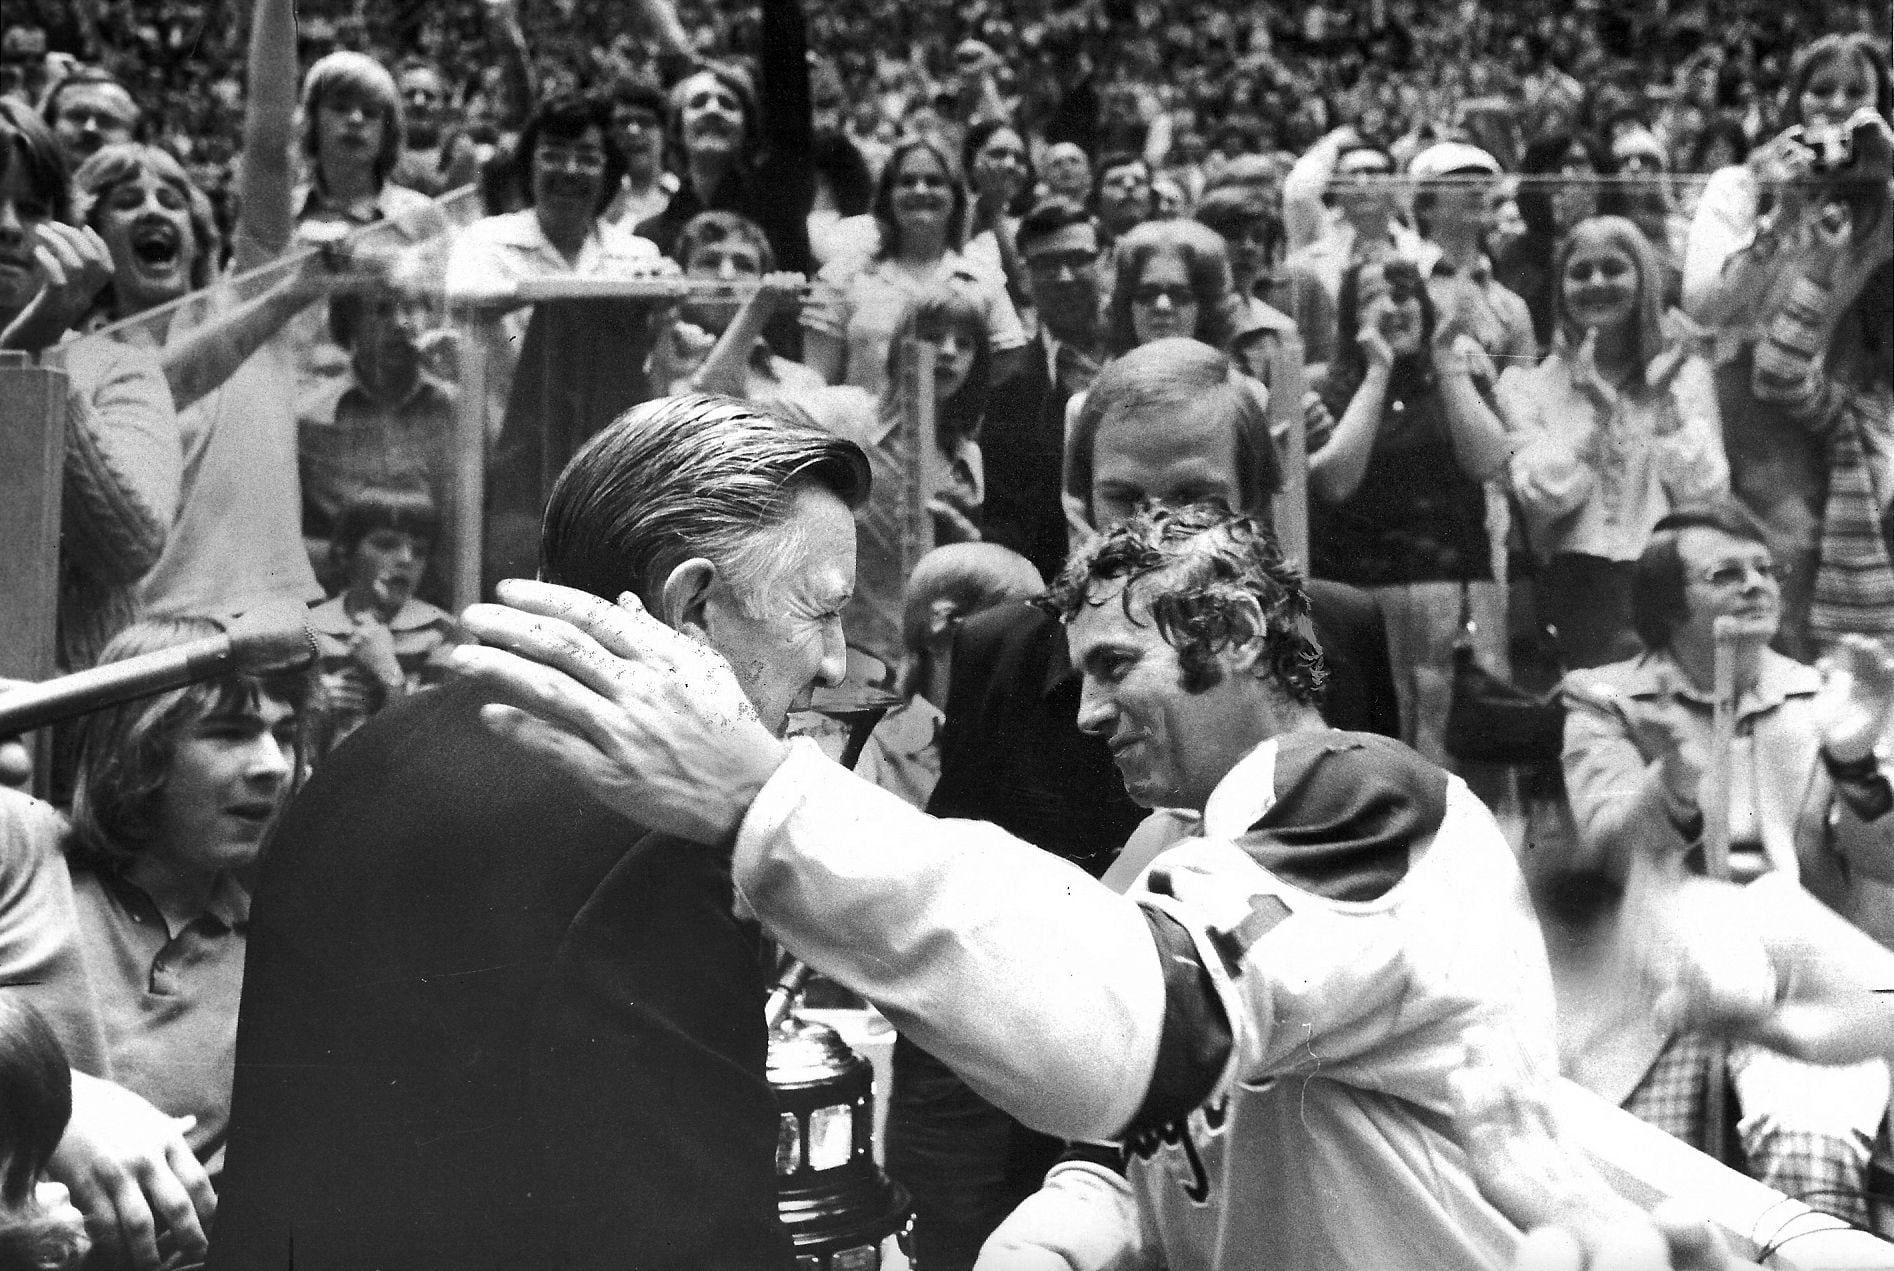 (Brian Acord) Salt Lake Golden Eagles star Lyle Bradley celebrates at the Salt Palace on May 5, 1975.